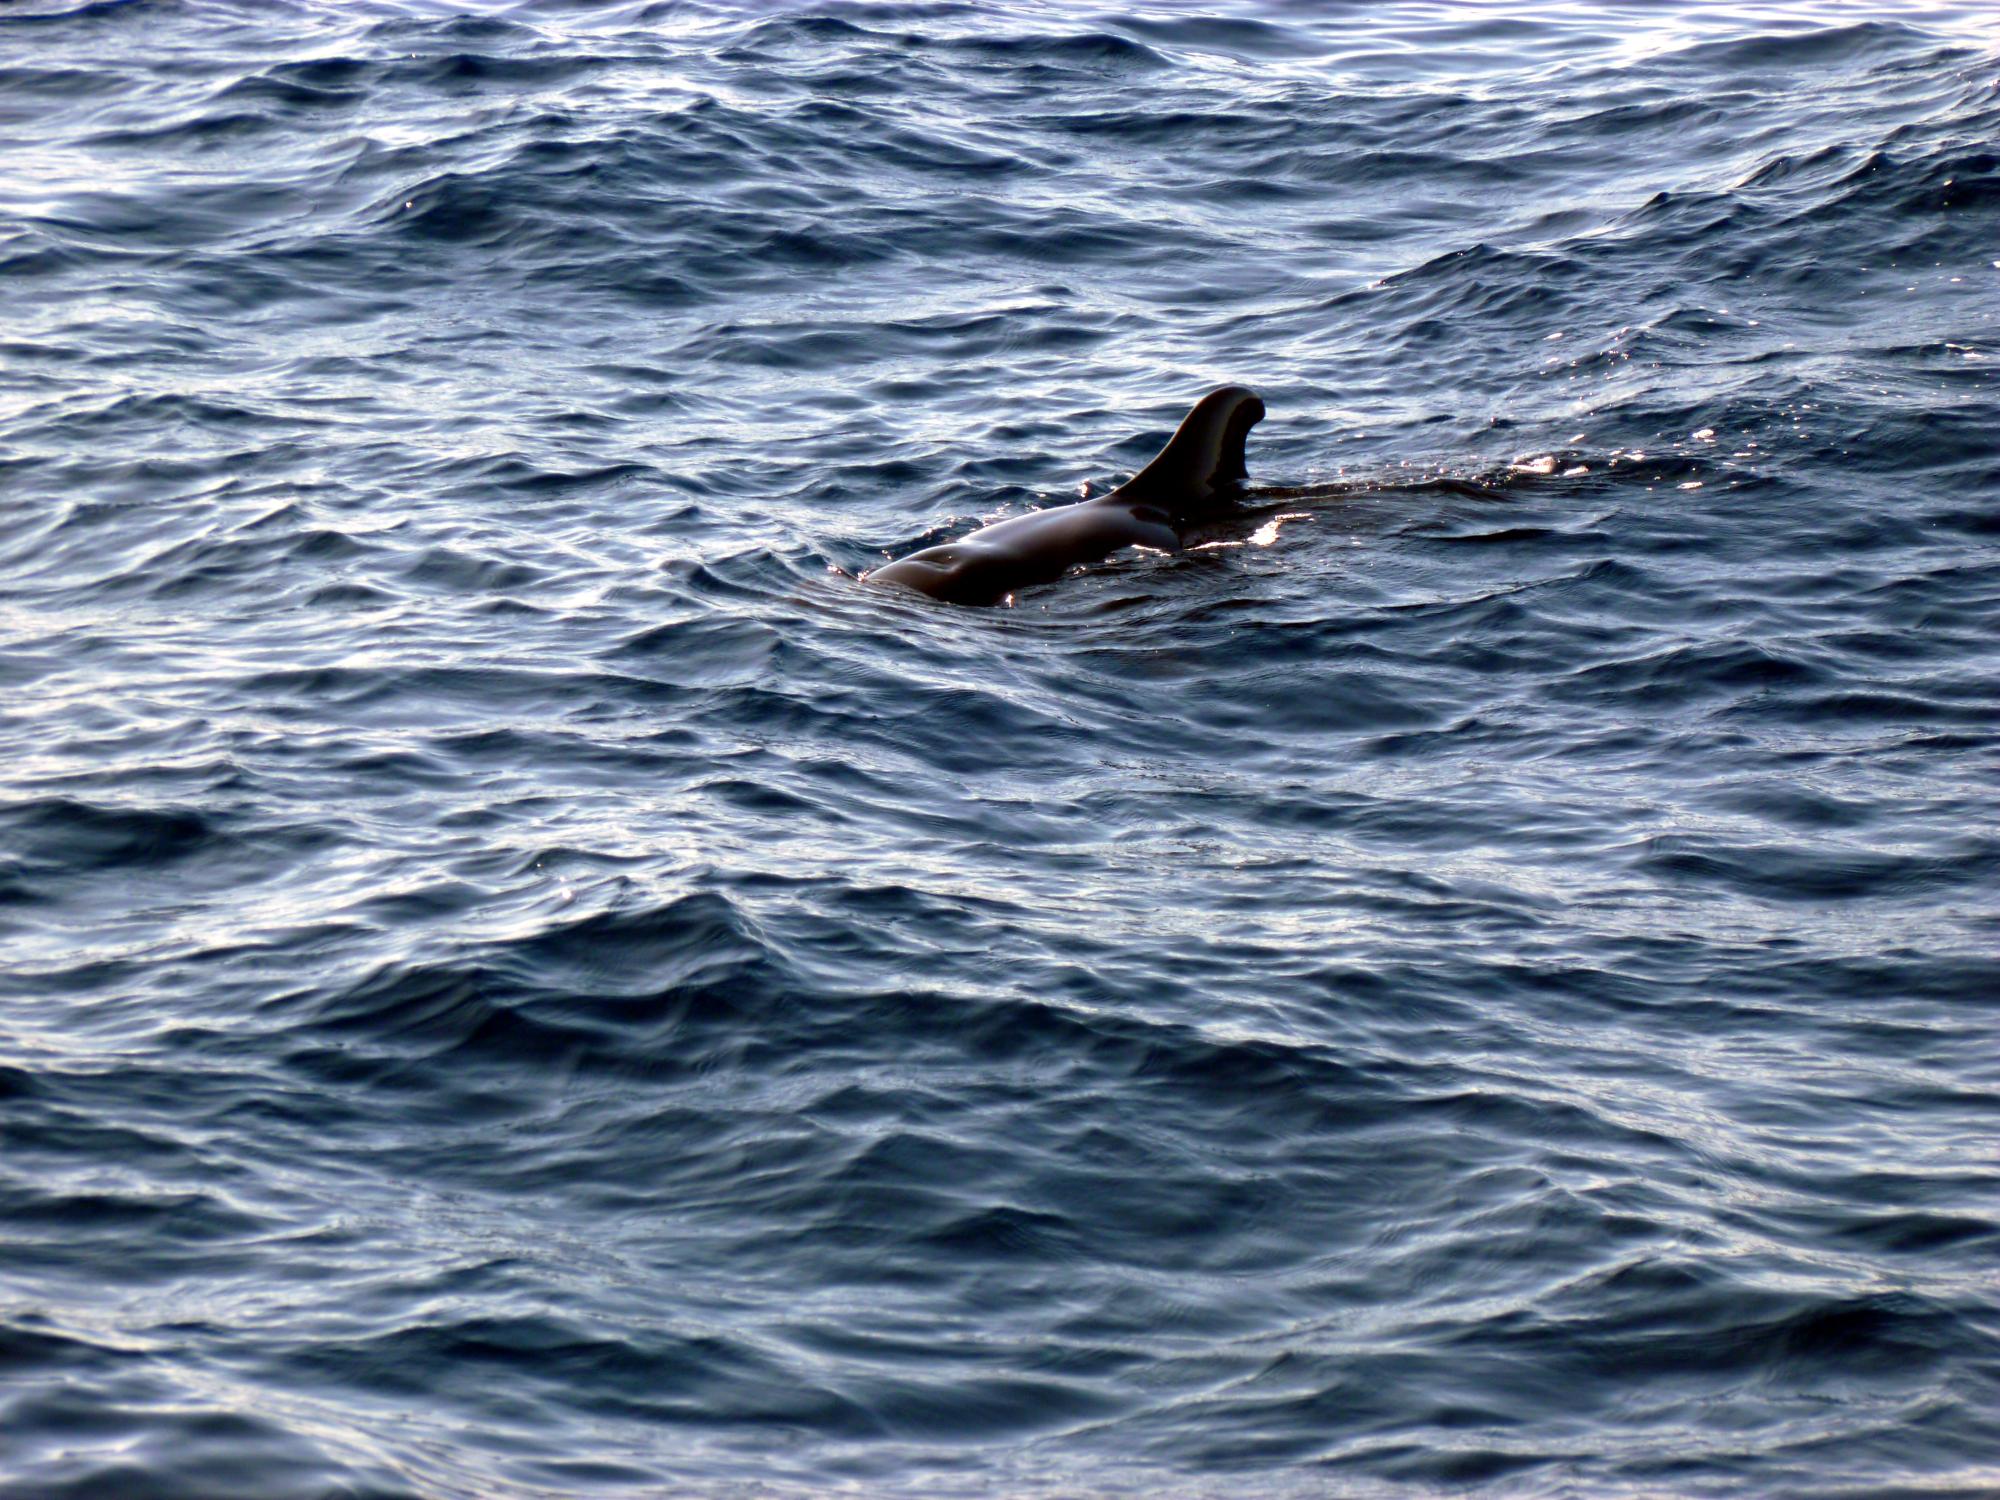  Canary Islands - Whale #1